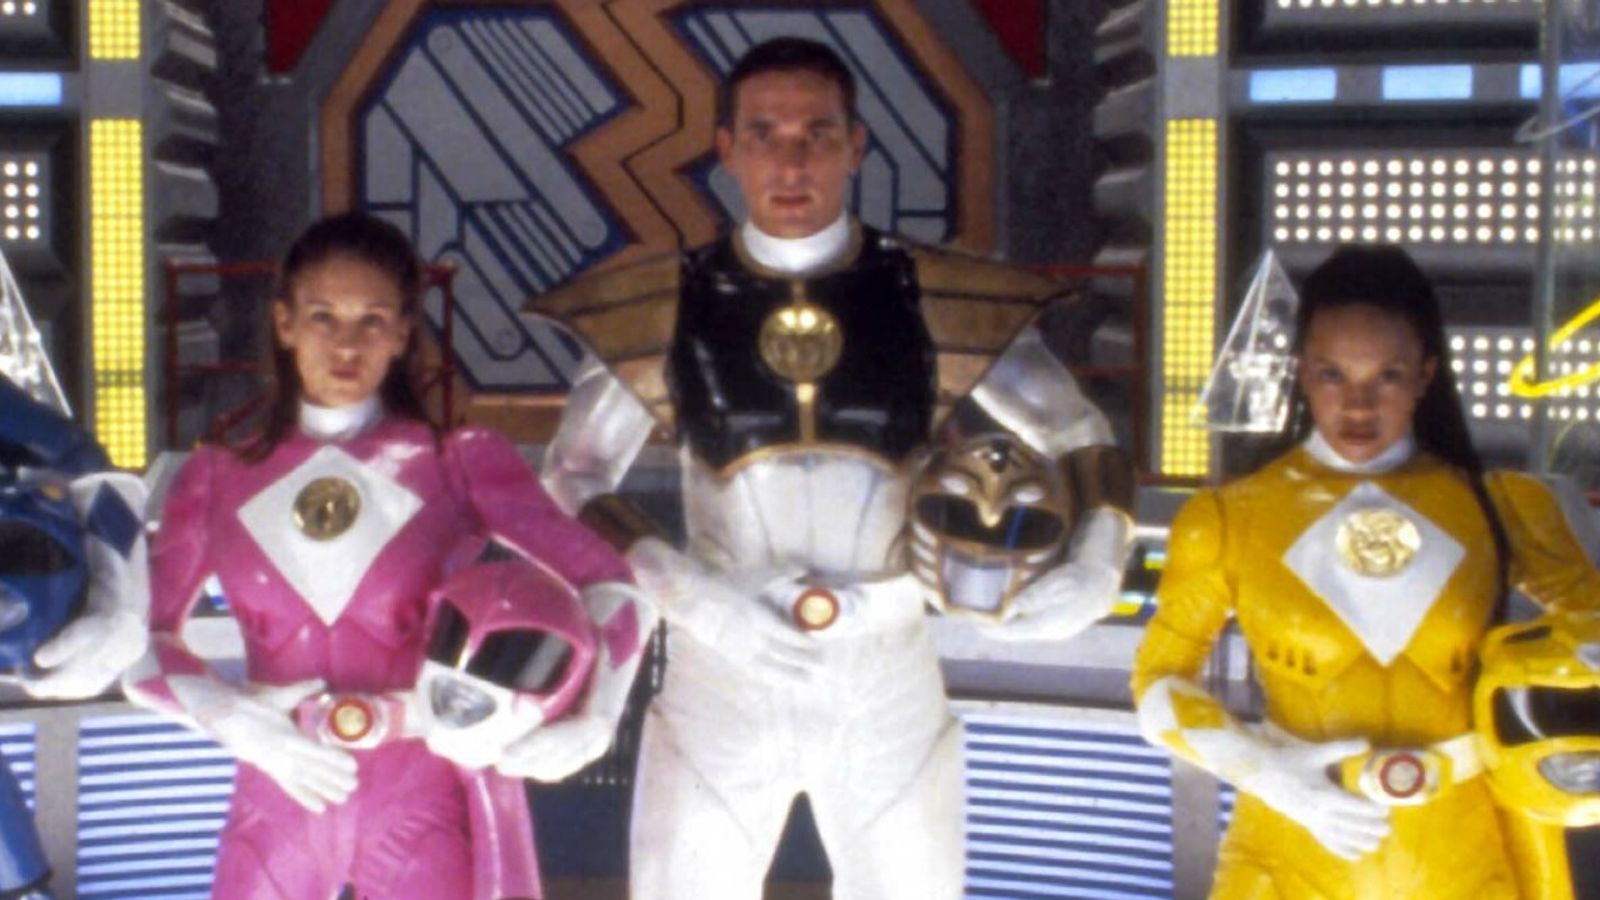 Jason David Frank, star of 1990s Power Rangers TV show, dies aged 49